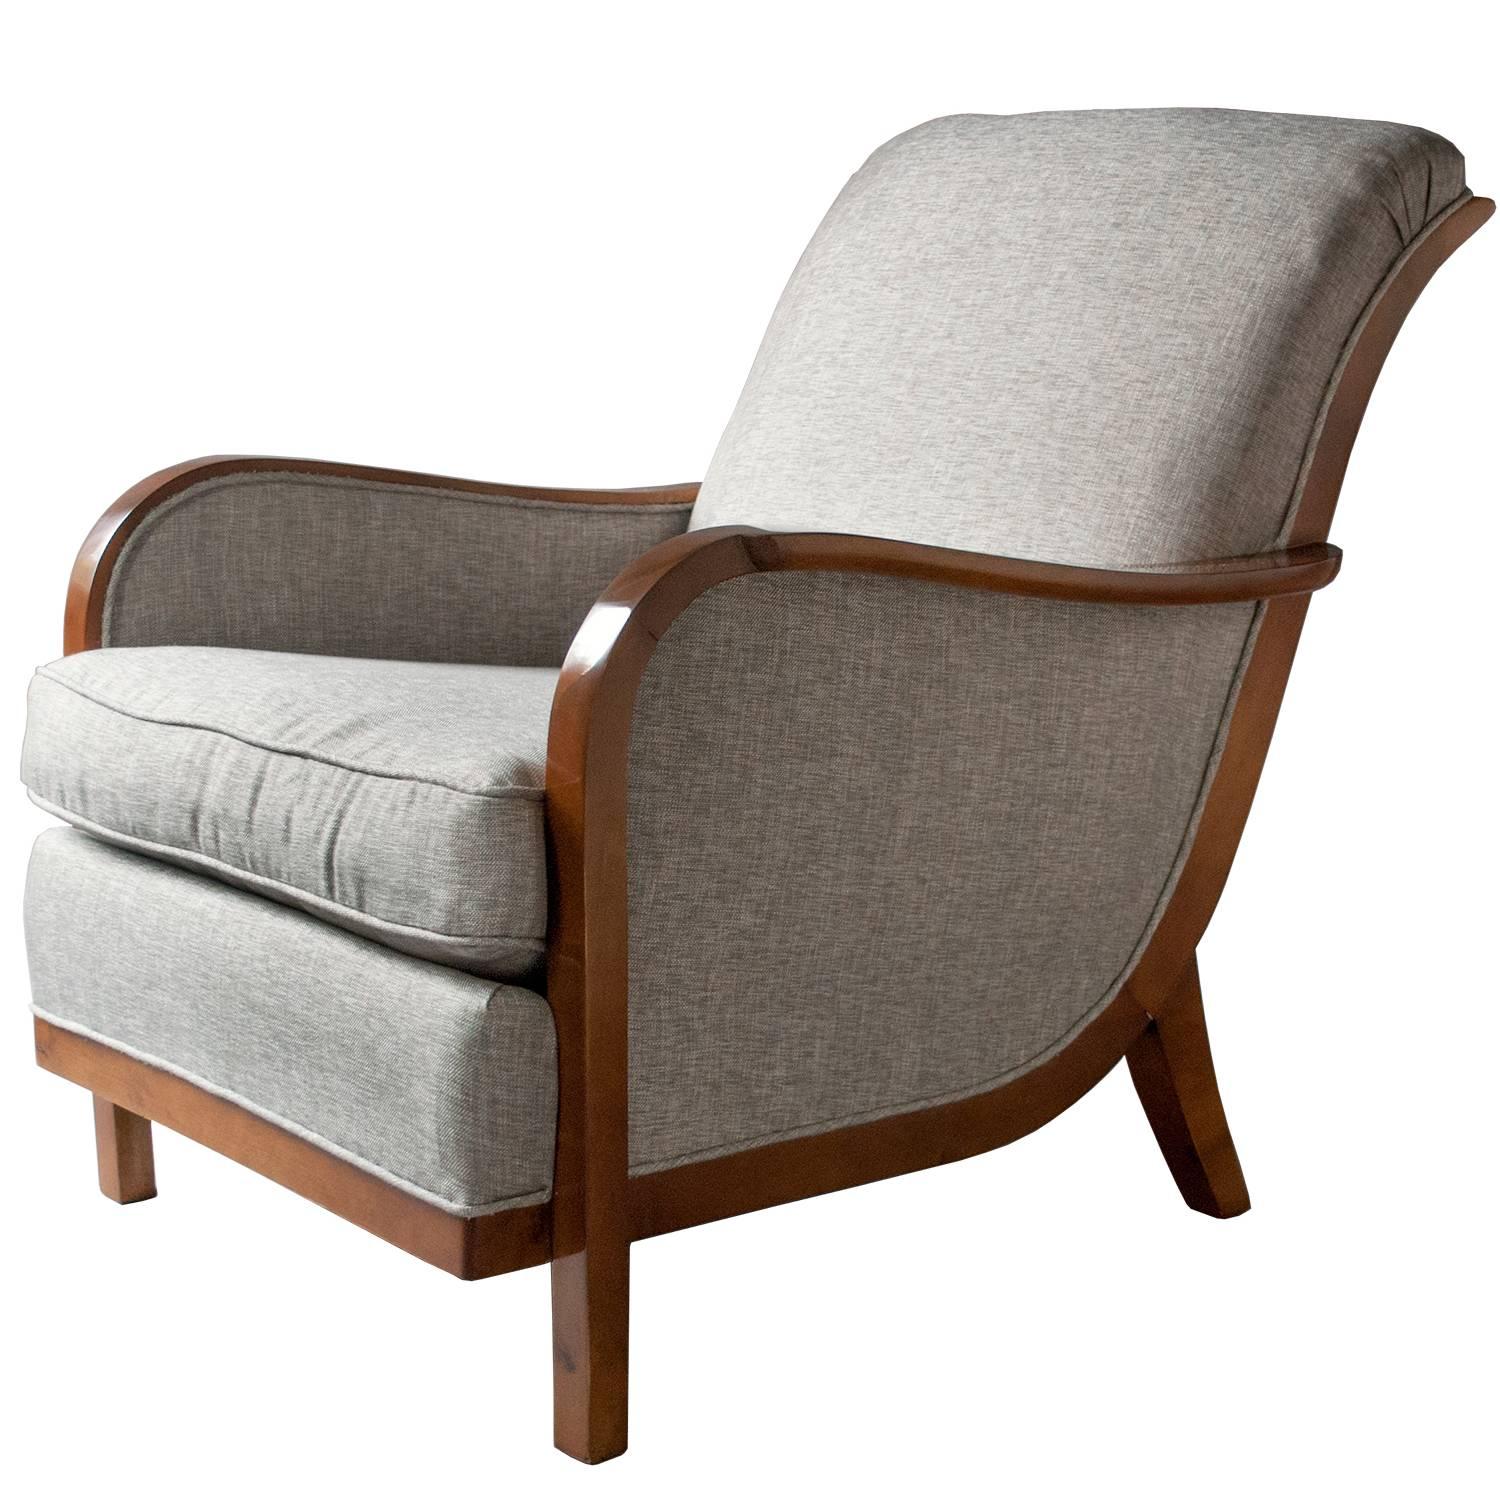 Swedish Art Deco Lounge Chair by Wilhelm Knoll, Malmo 1933